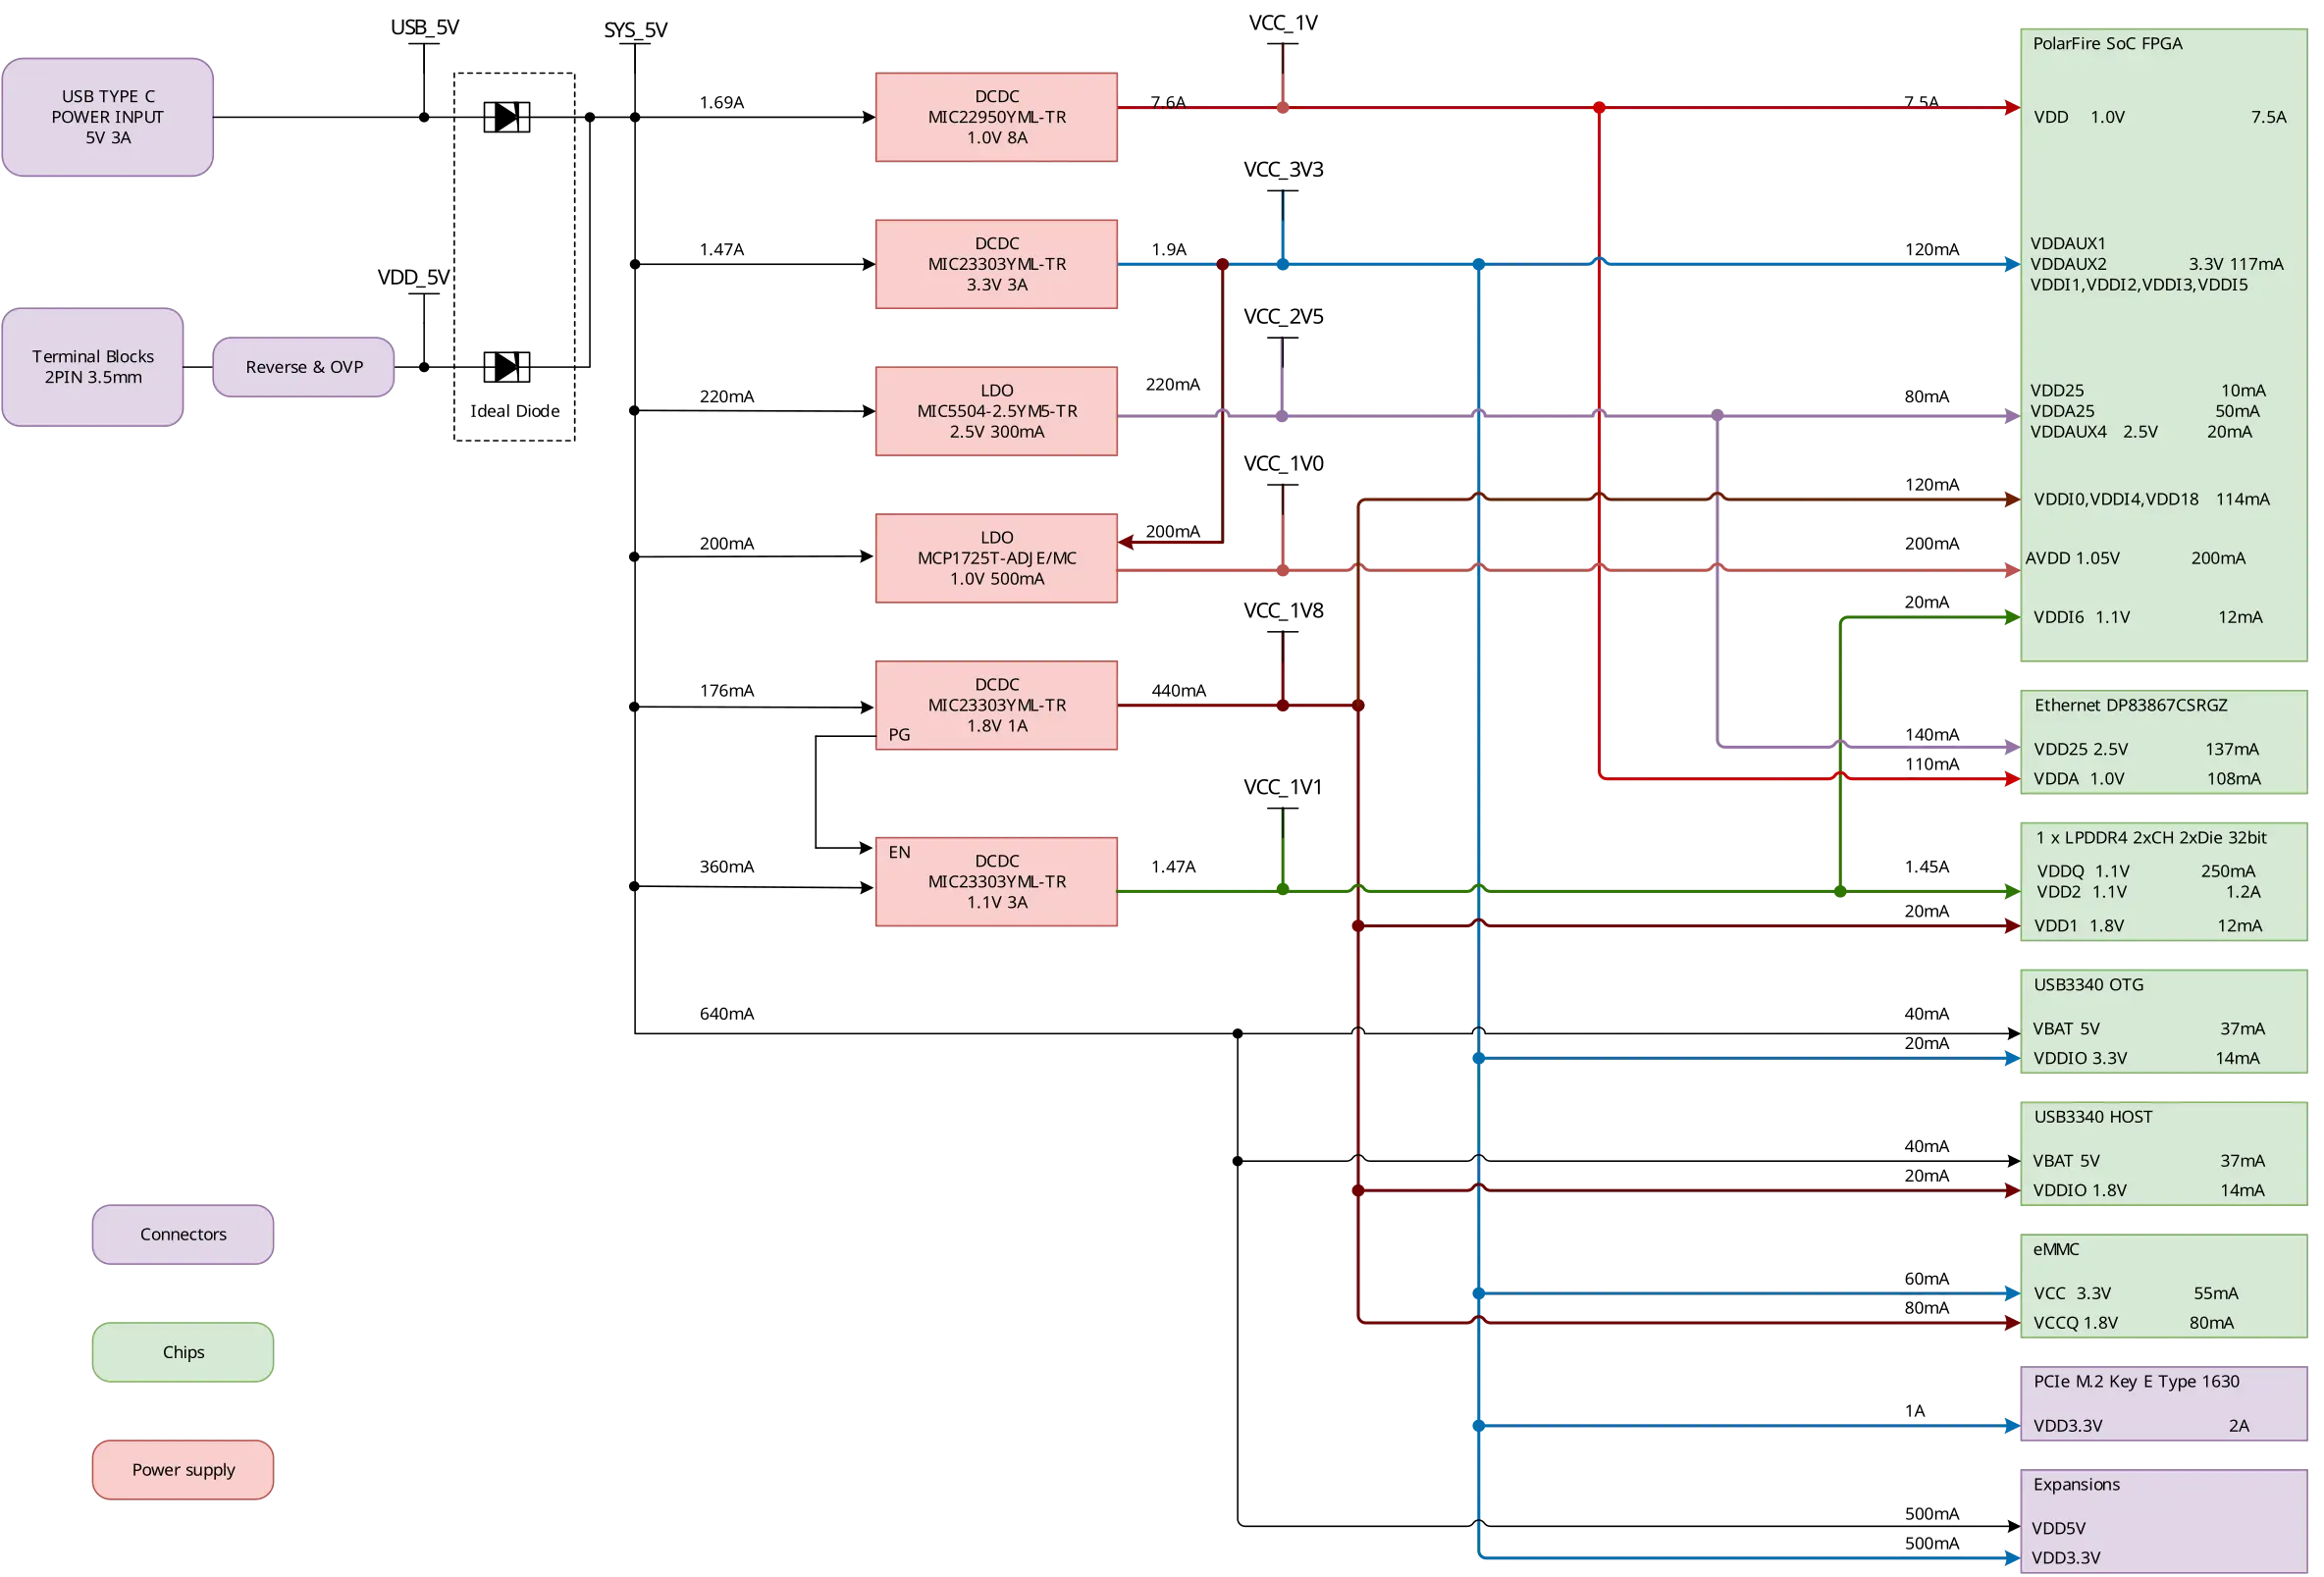 Power tree diagram